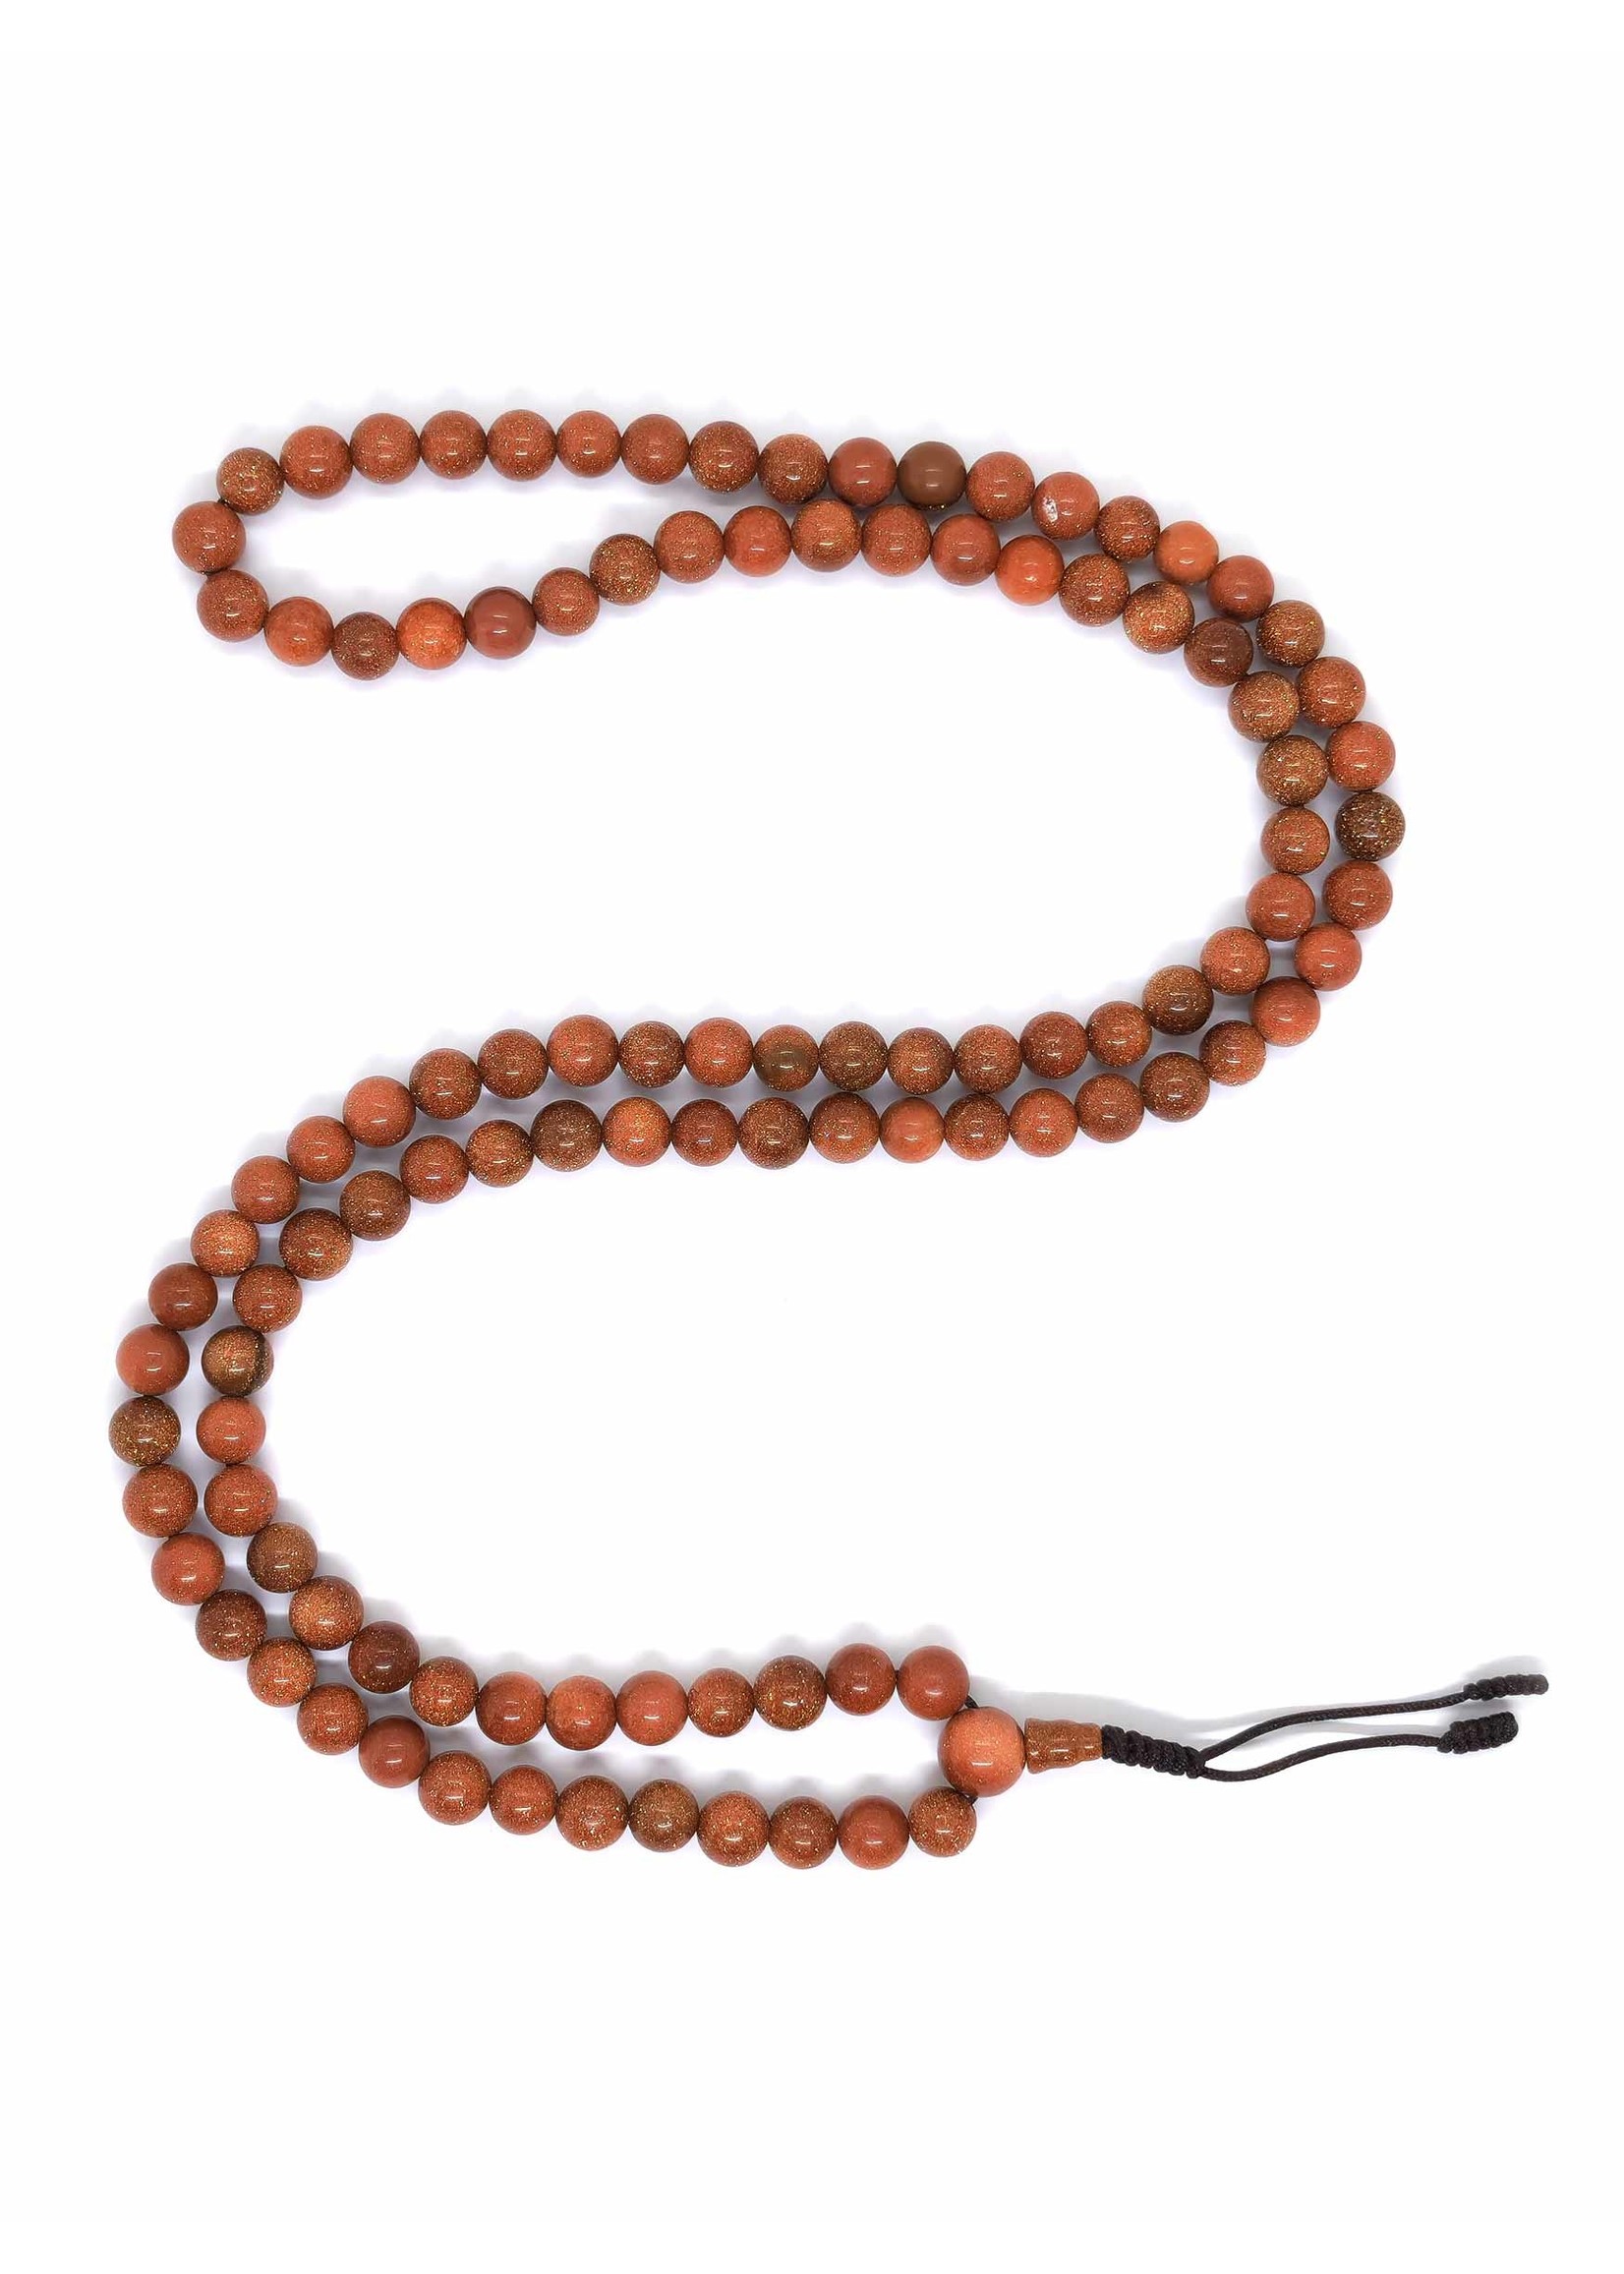 Tibetan Prayer Beads Mala Sunstone